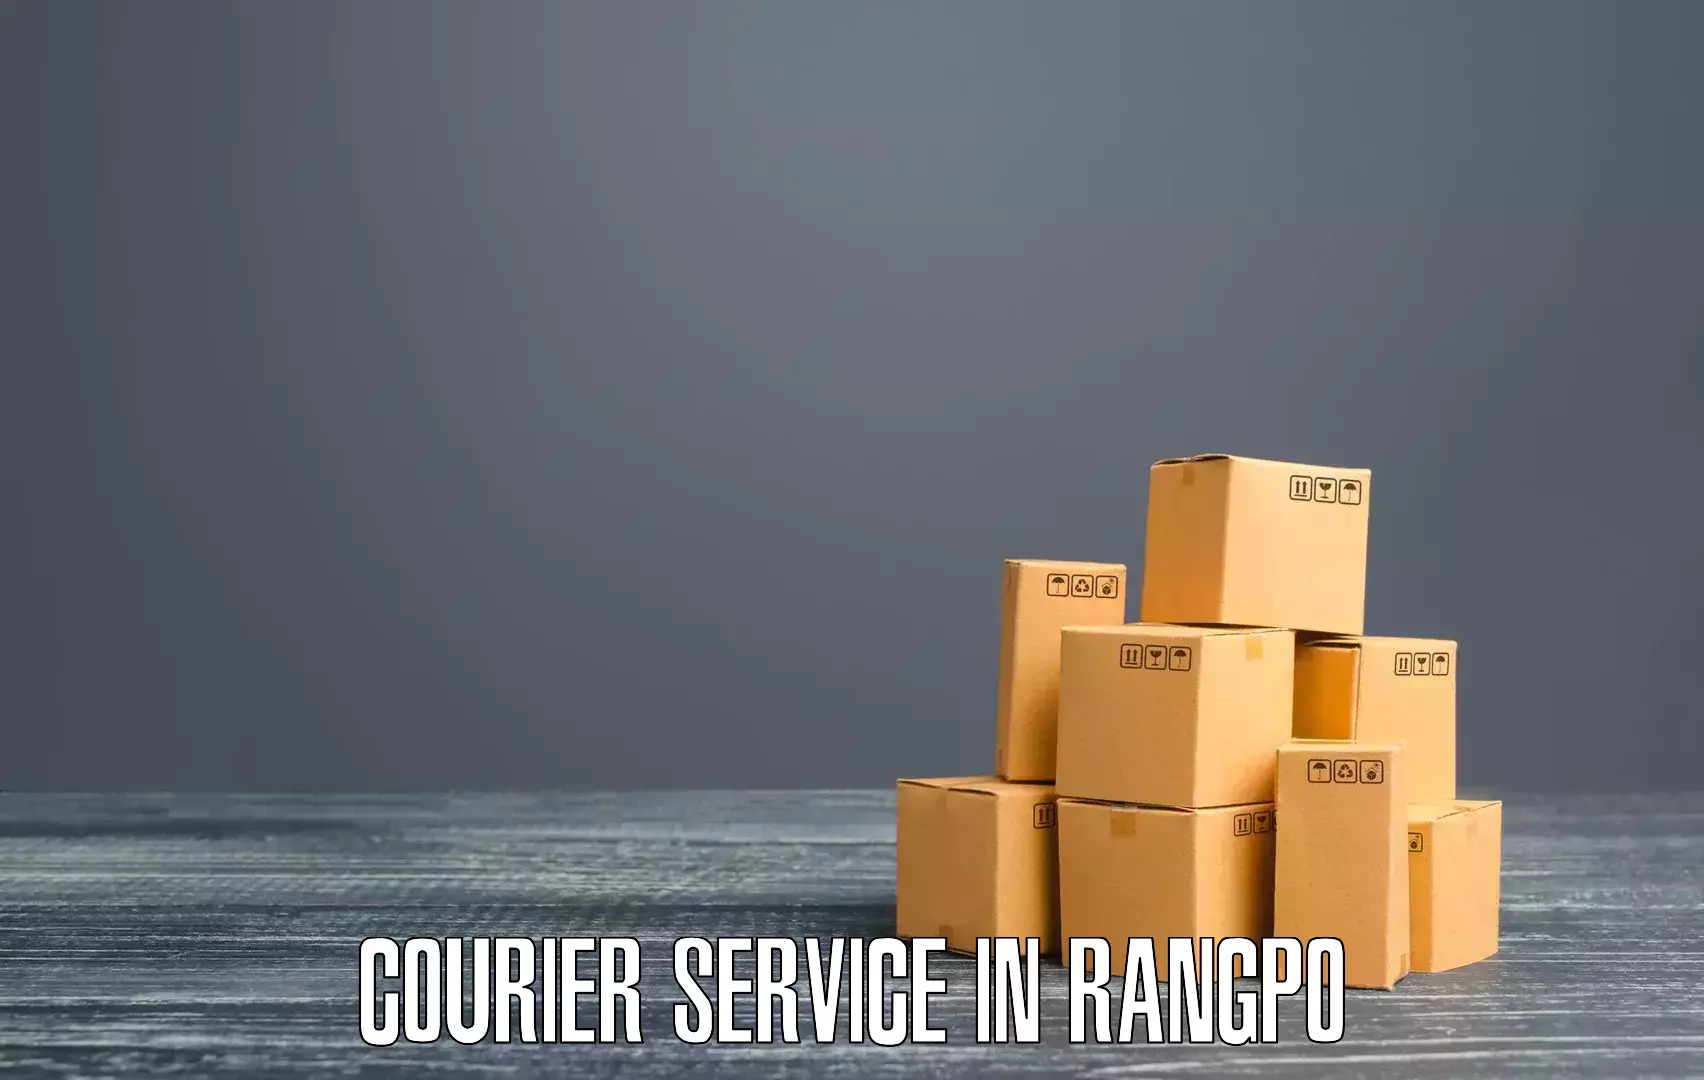 Courier service efficiency in Rangpo